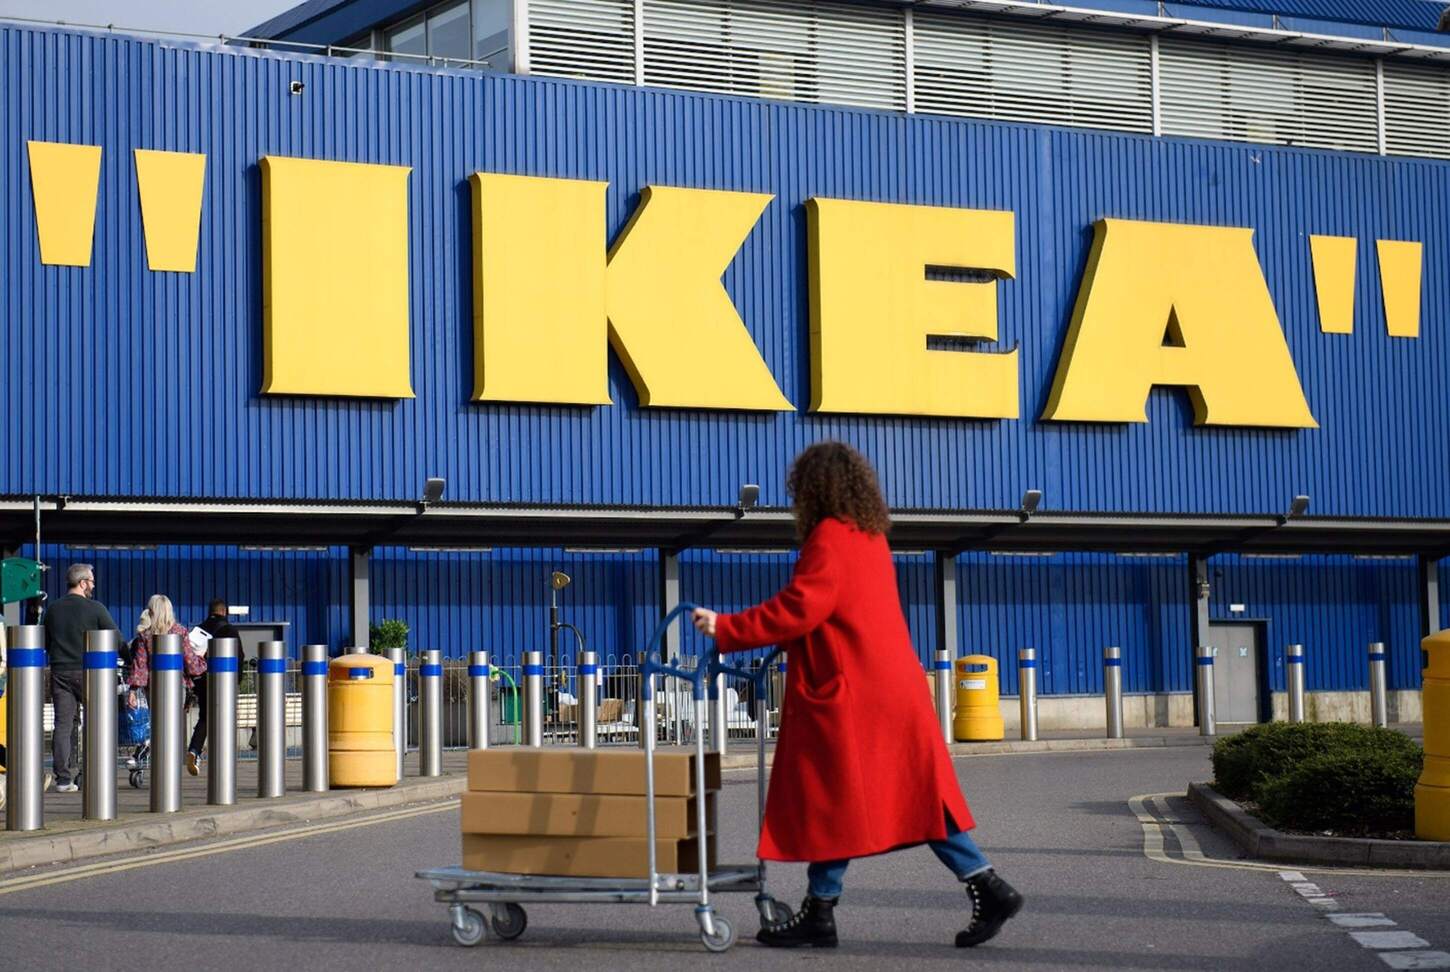 IKEA Virgil Abloh storefront with quotation marks around IKEA logo